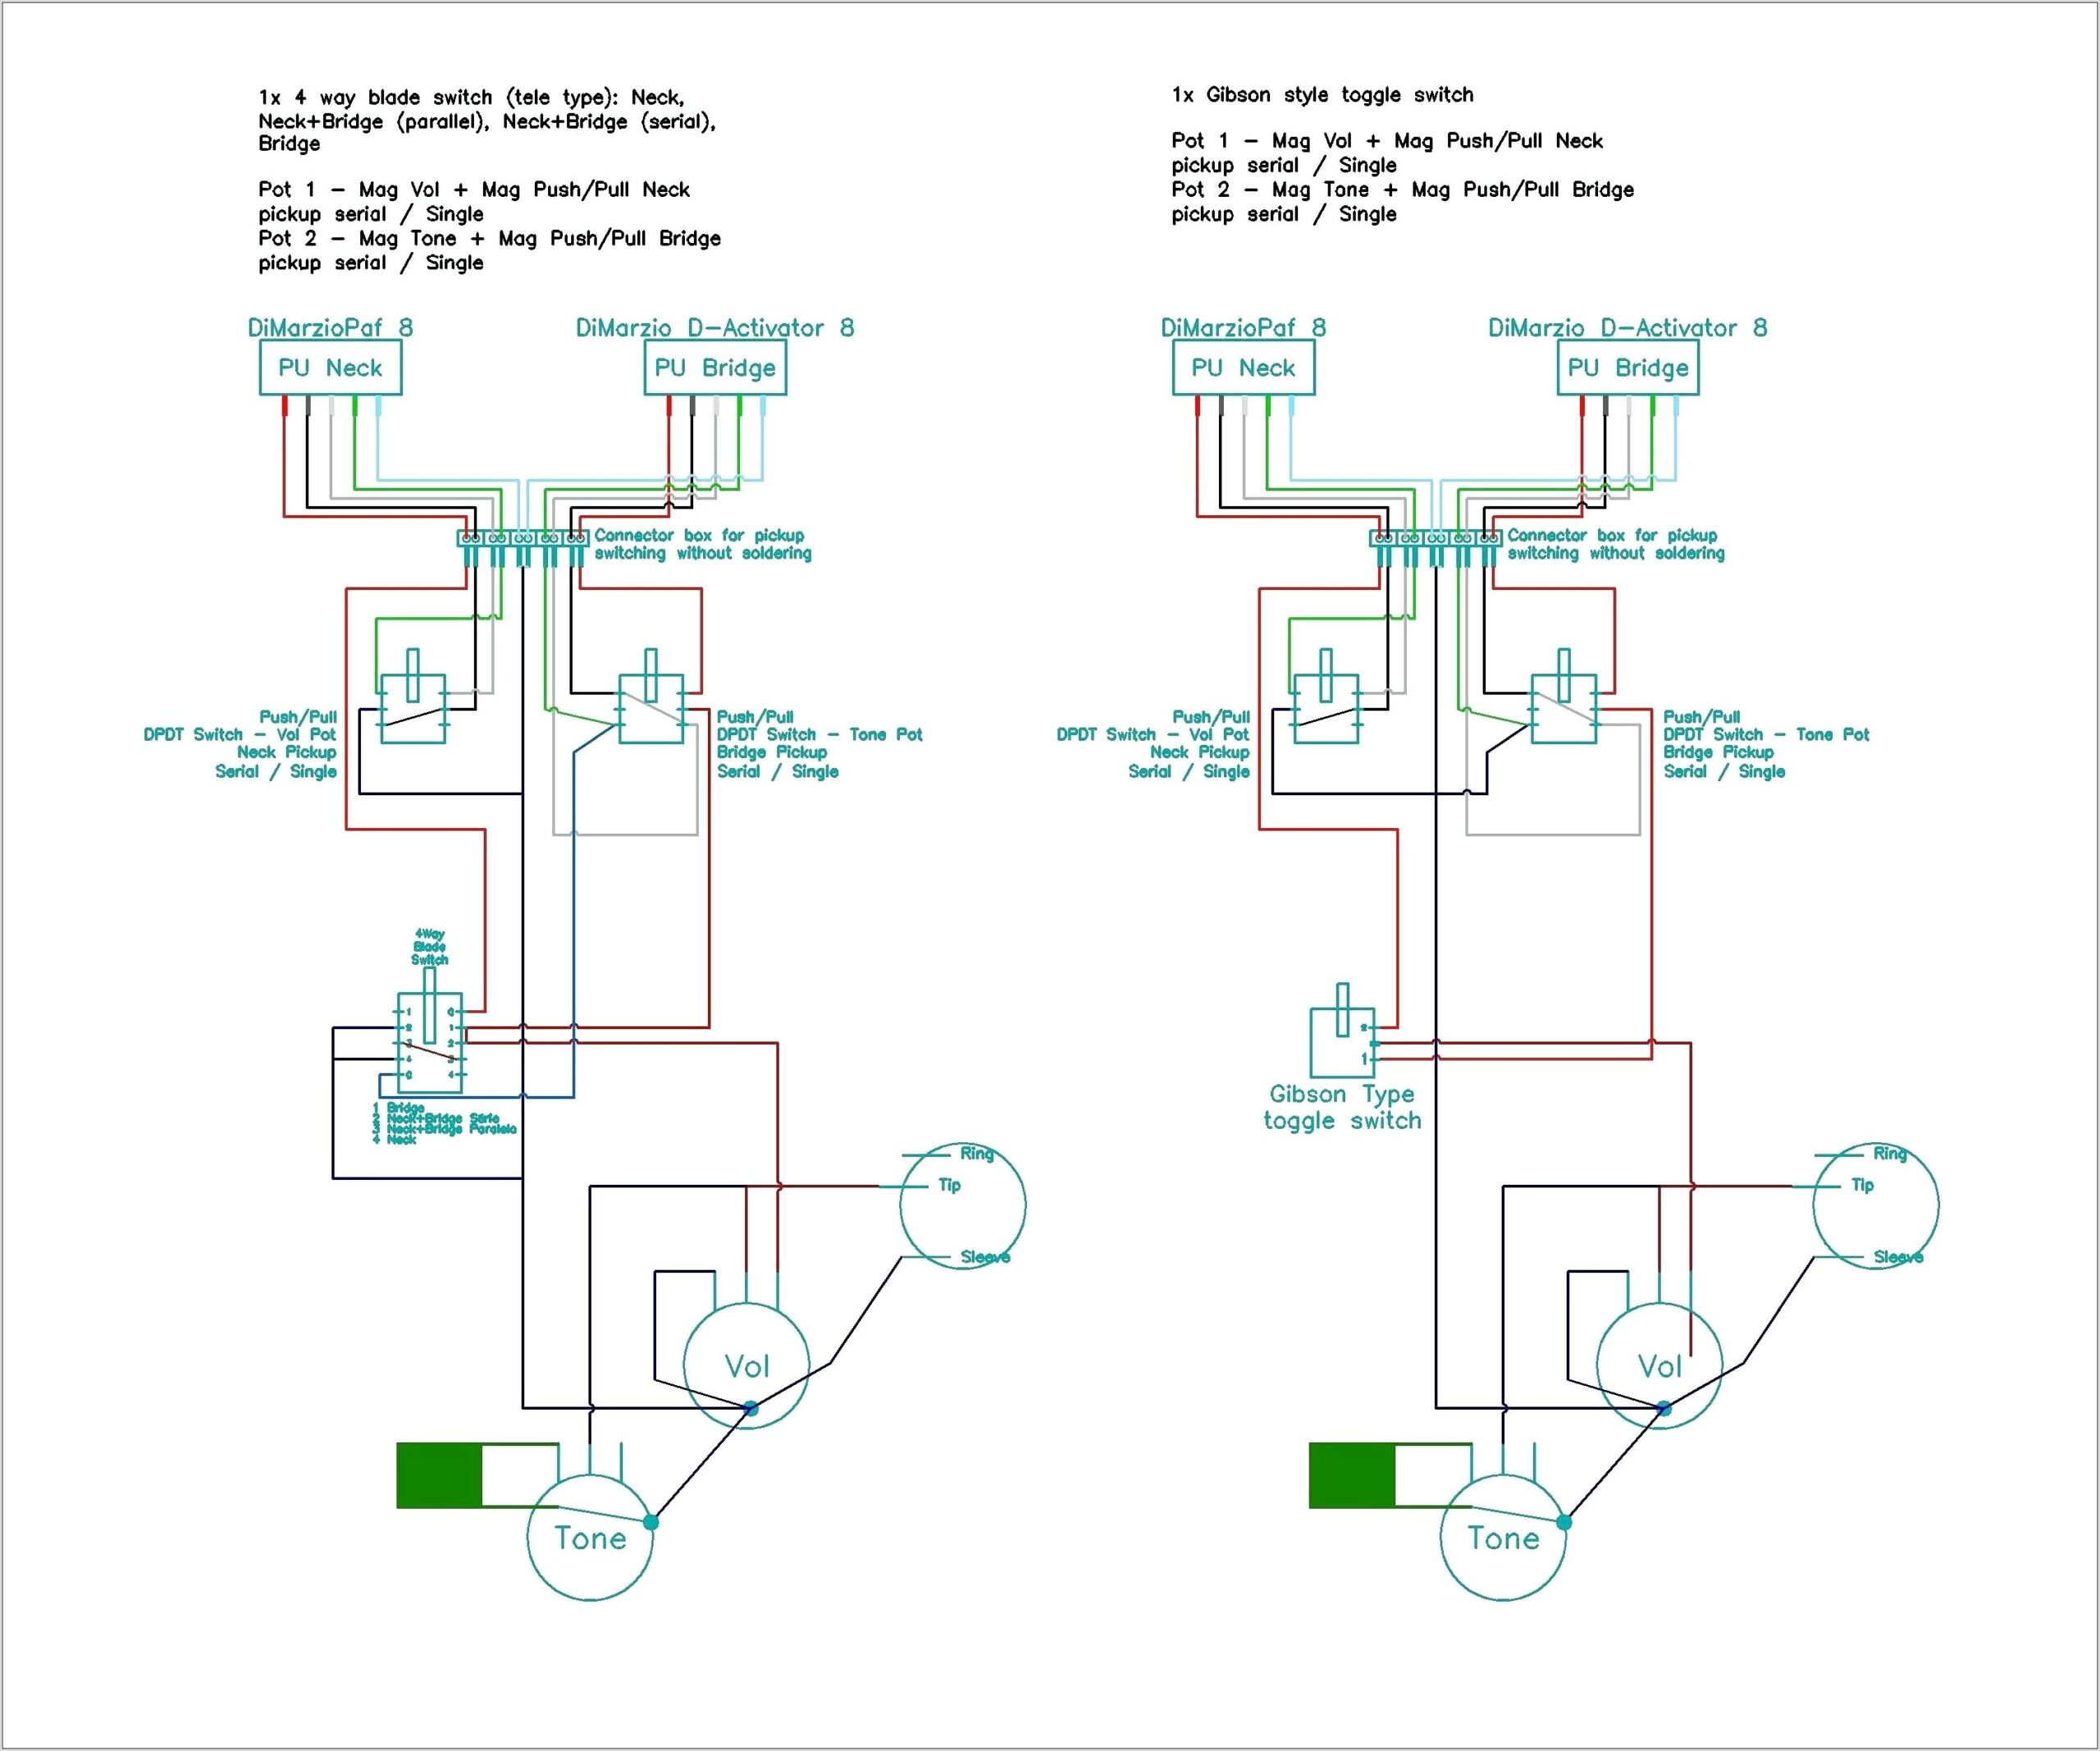 Rickenbacker Bass Wiring Diagram